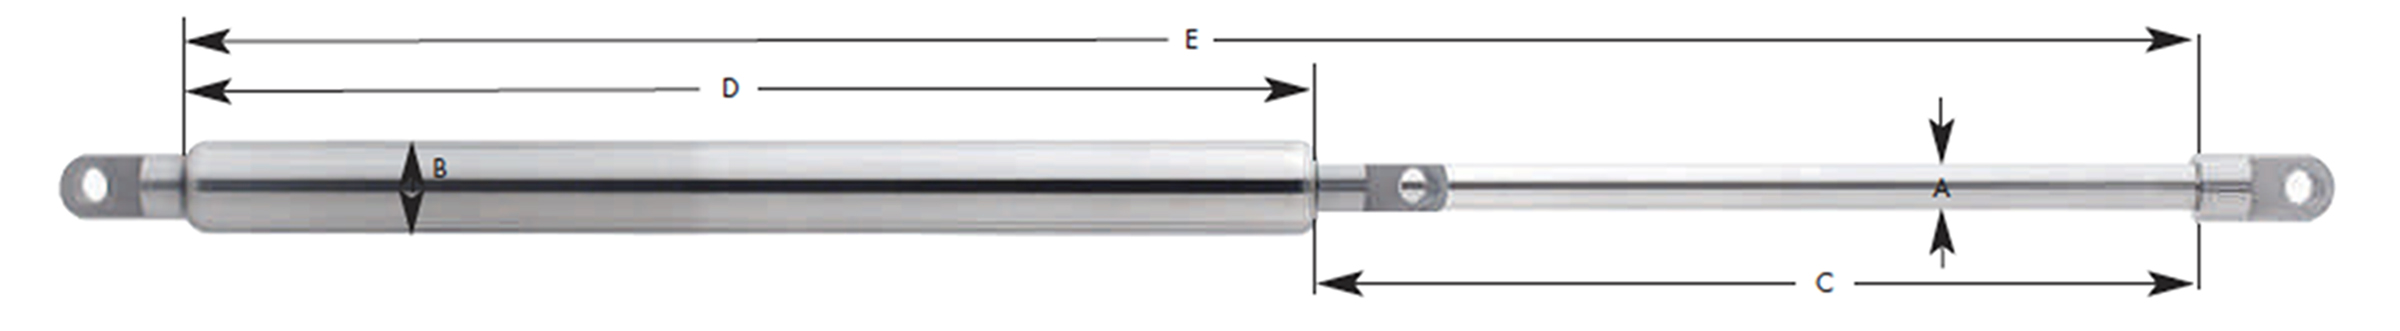 Adjustable Force Tension Gas Spring 1100-24